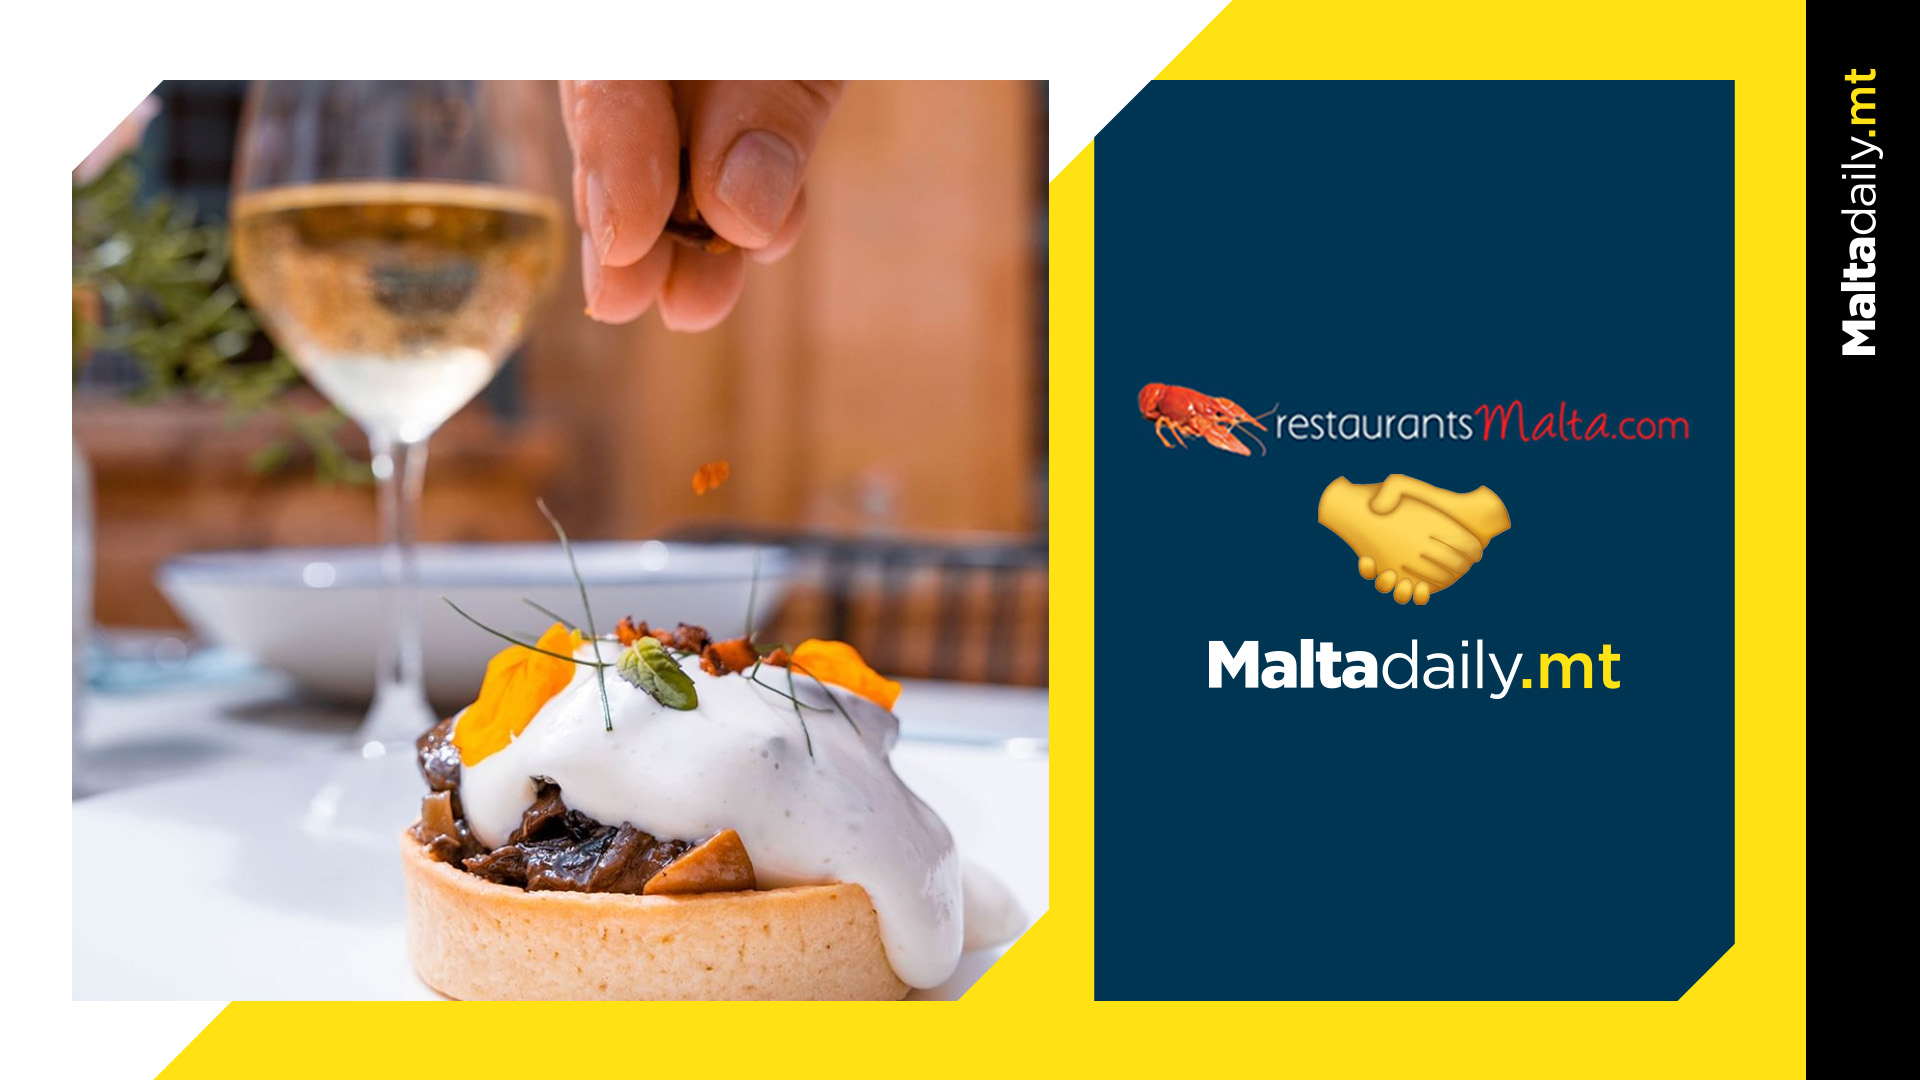 Malta Daily Named Official Media Partner for Restaurants Malta Awards